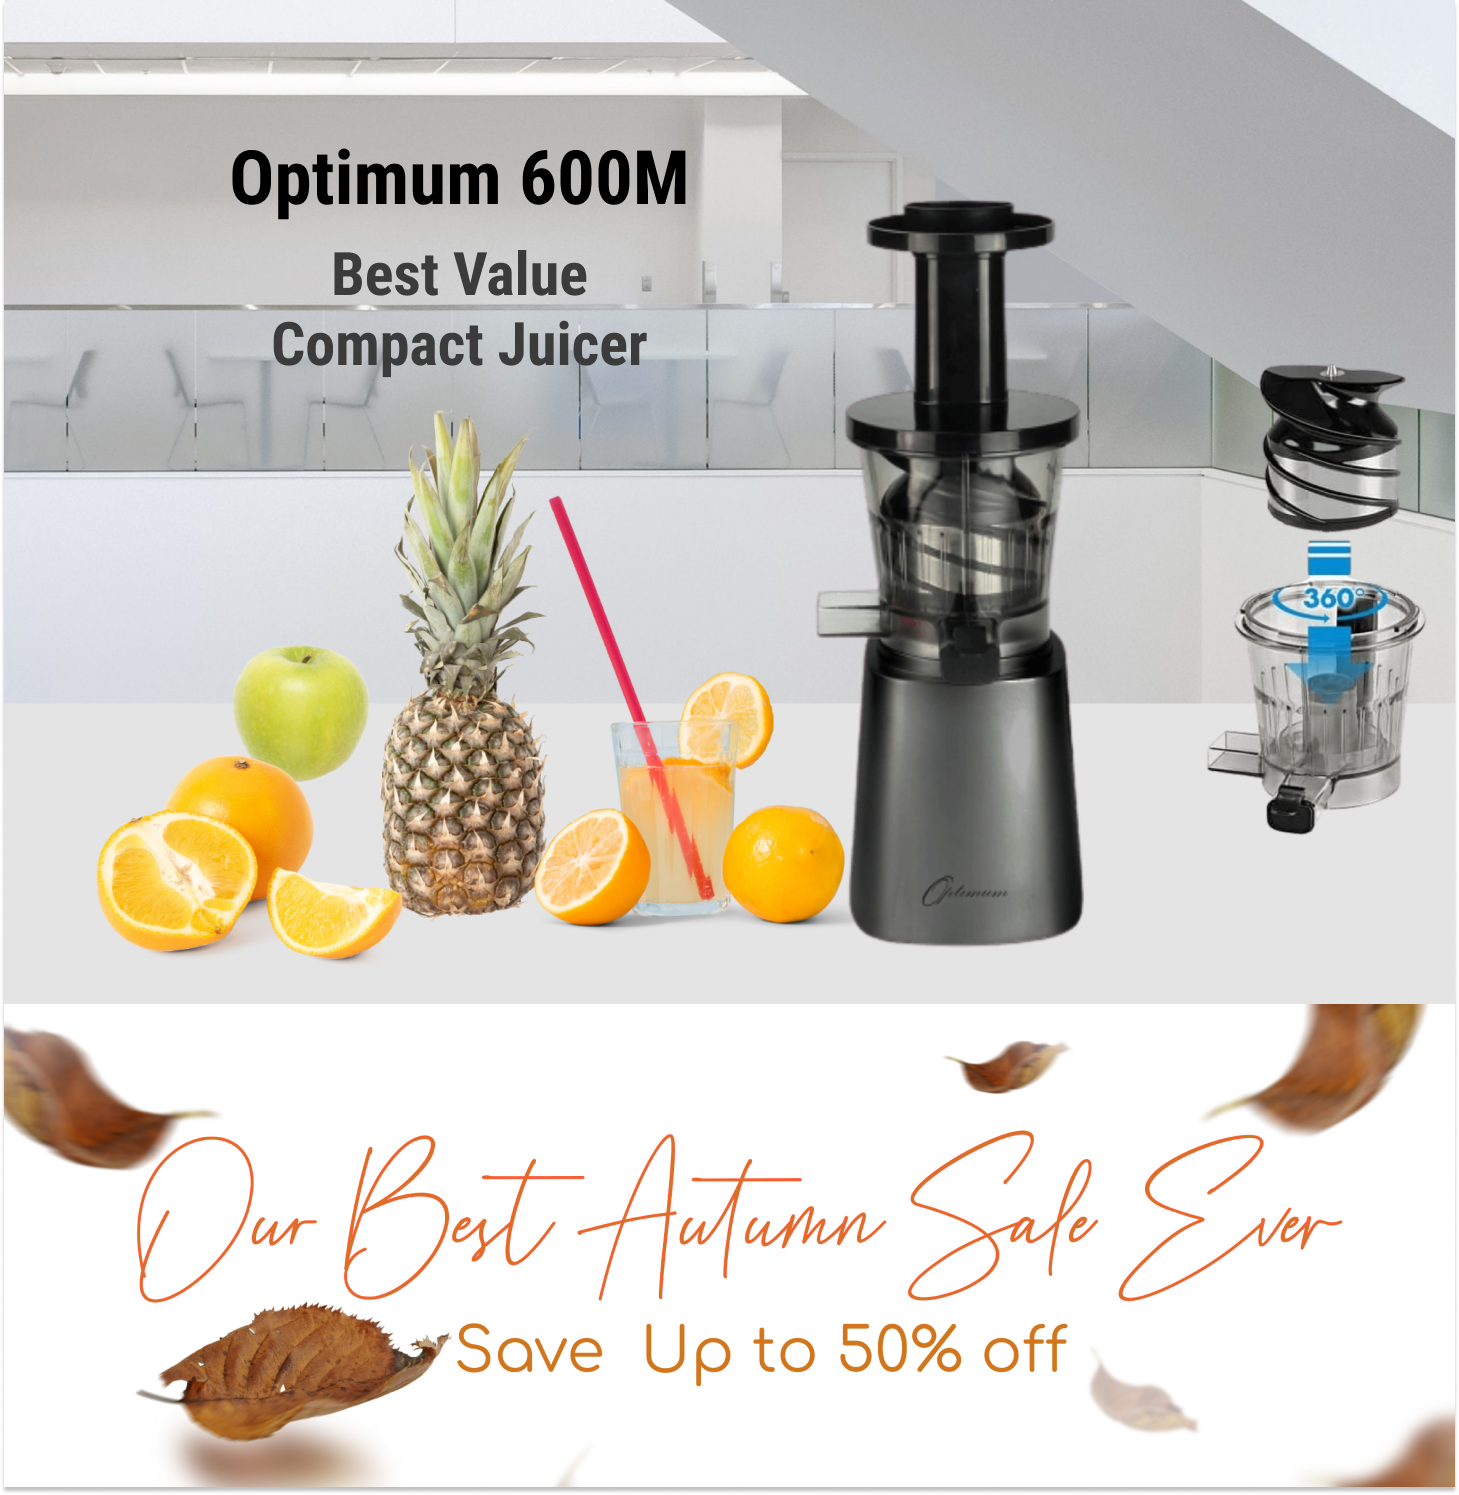 600M Juicer autumn sale